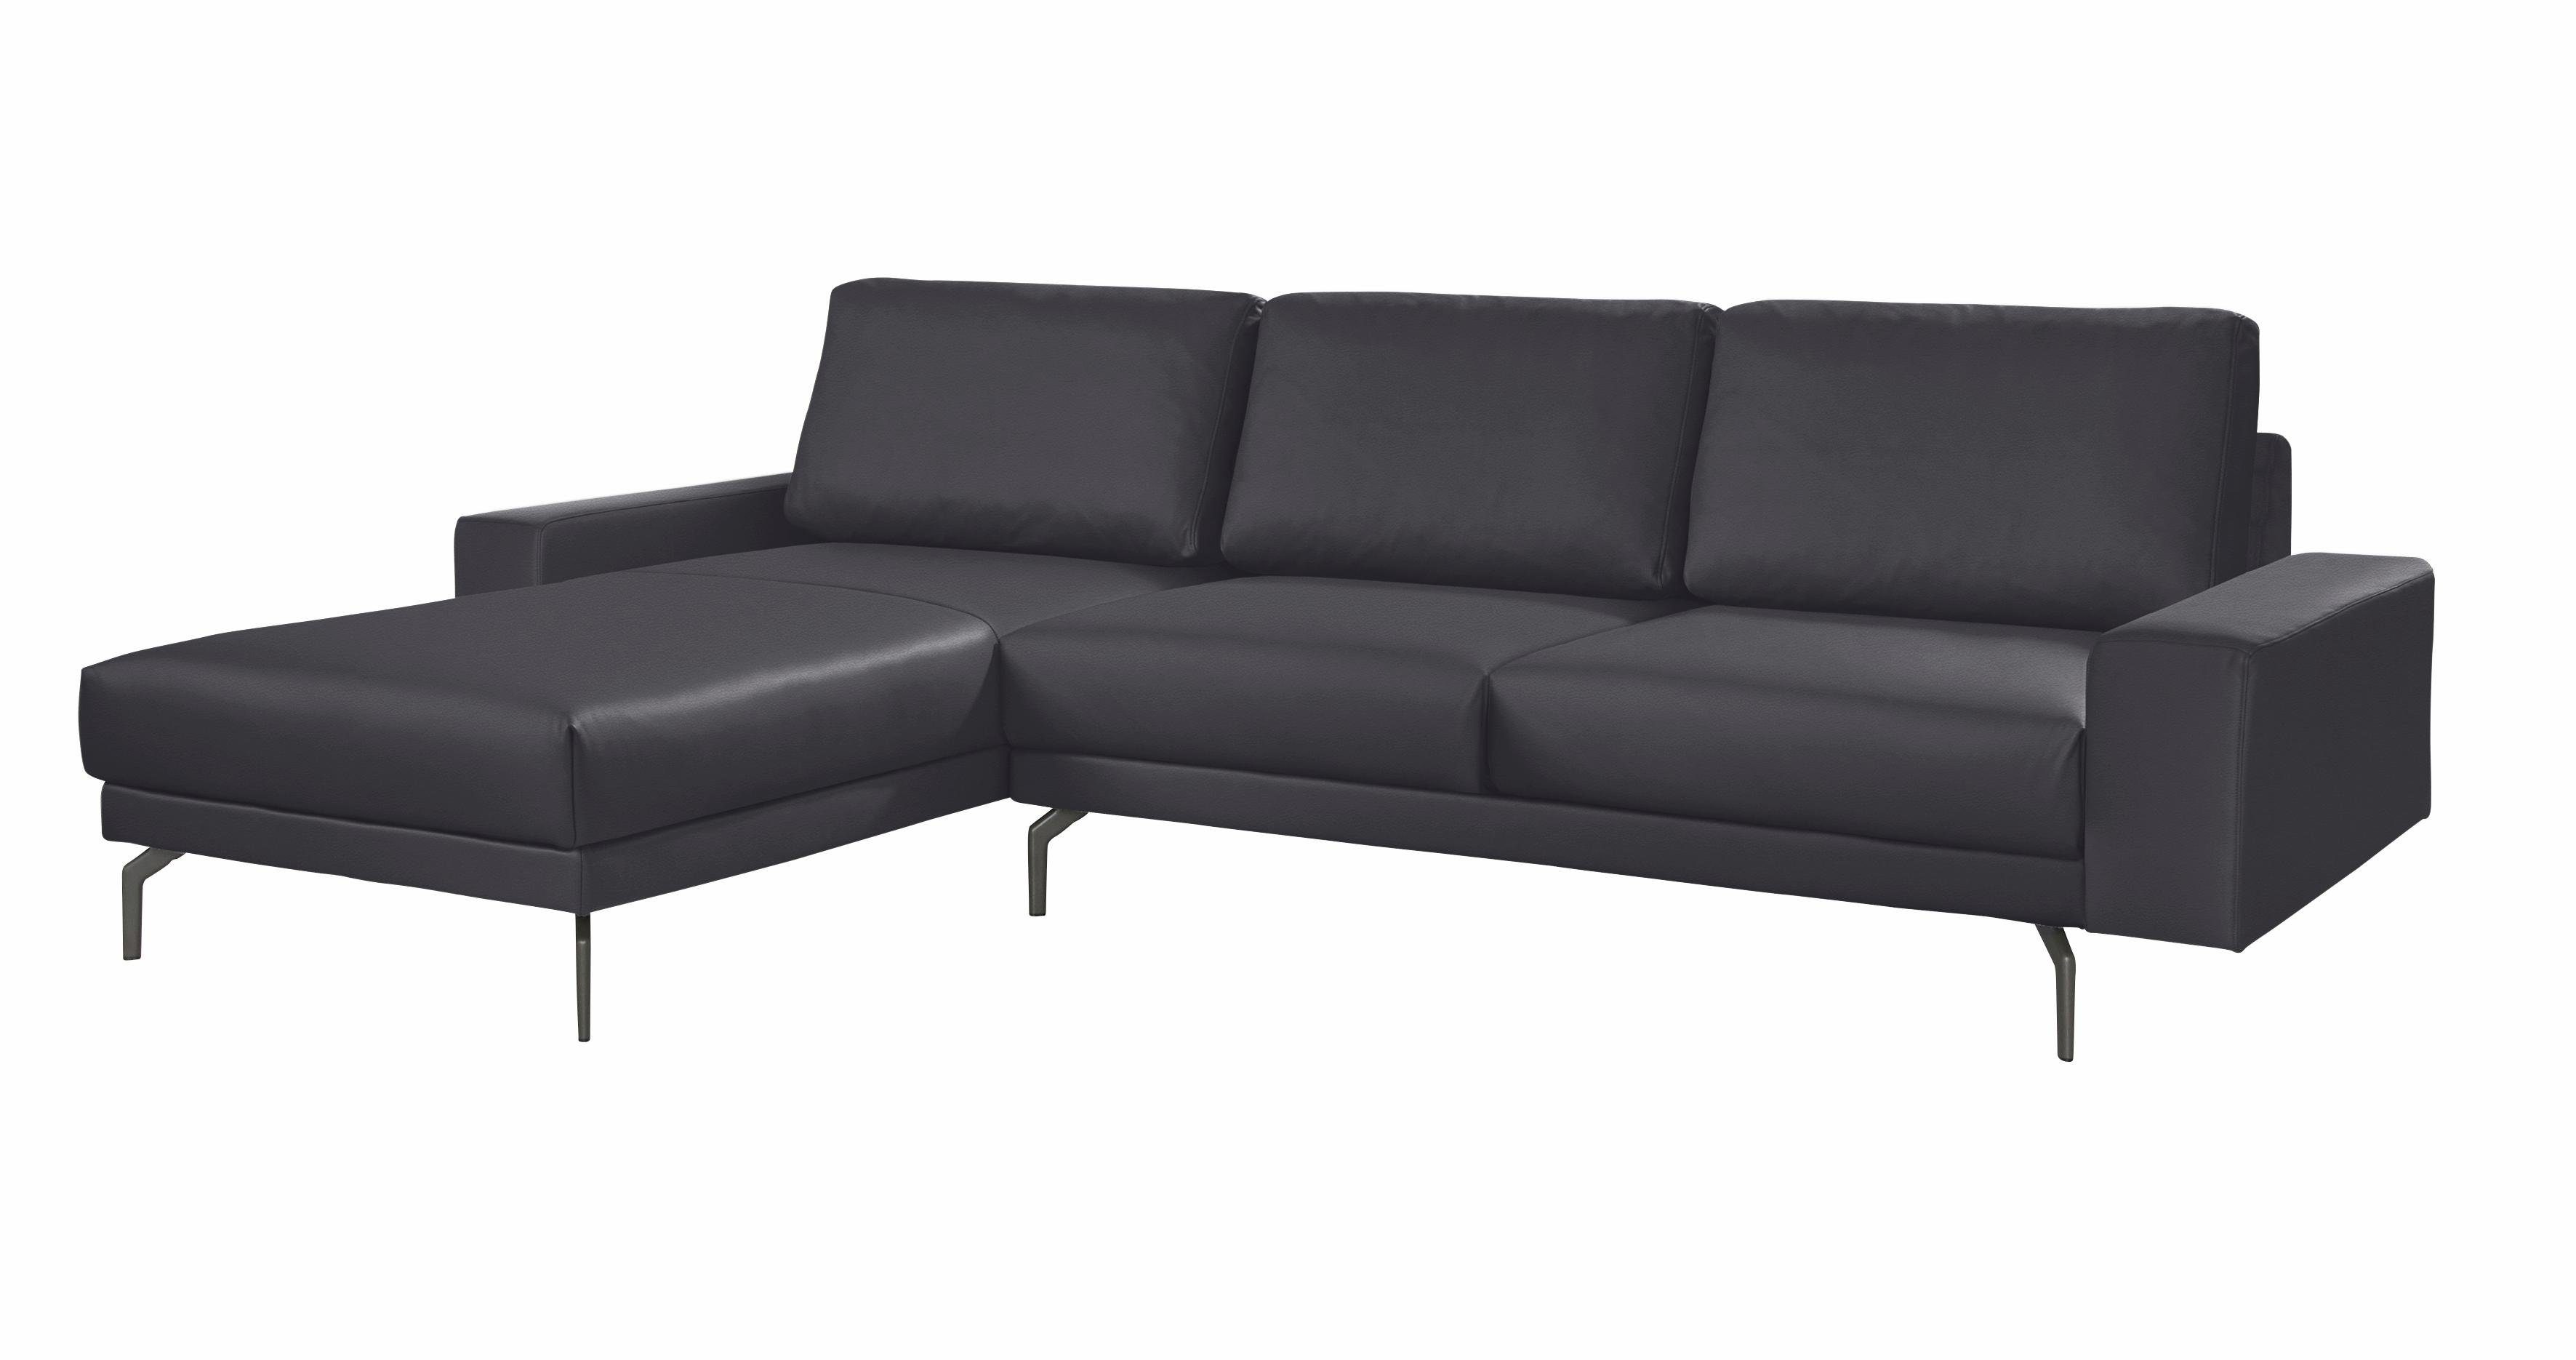 hülsta sofa Ecksofa hs.450, Armlehne breit und niedrig, Alugussfüße in umbragrau, Breite 294 cm